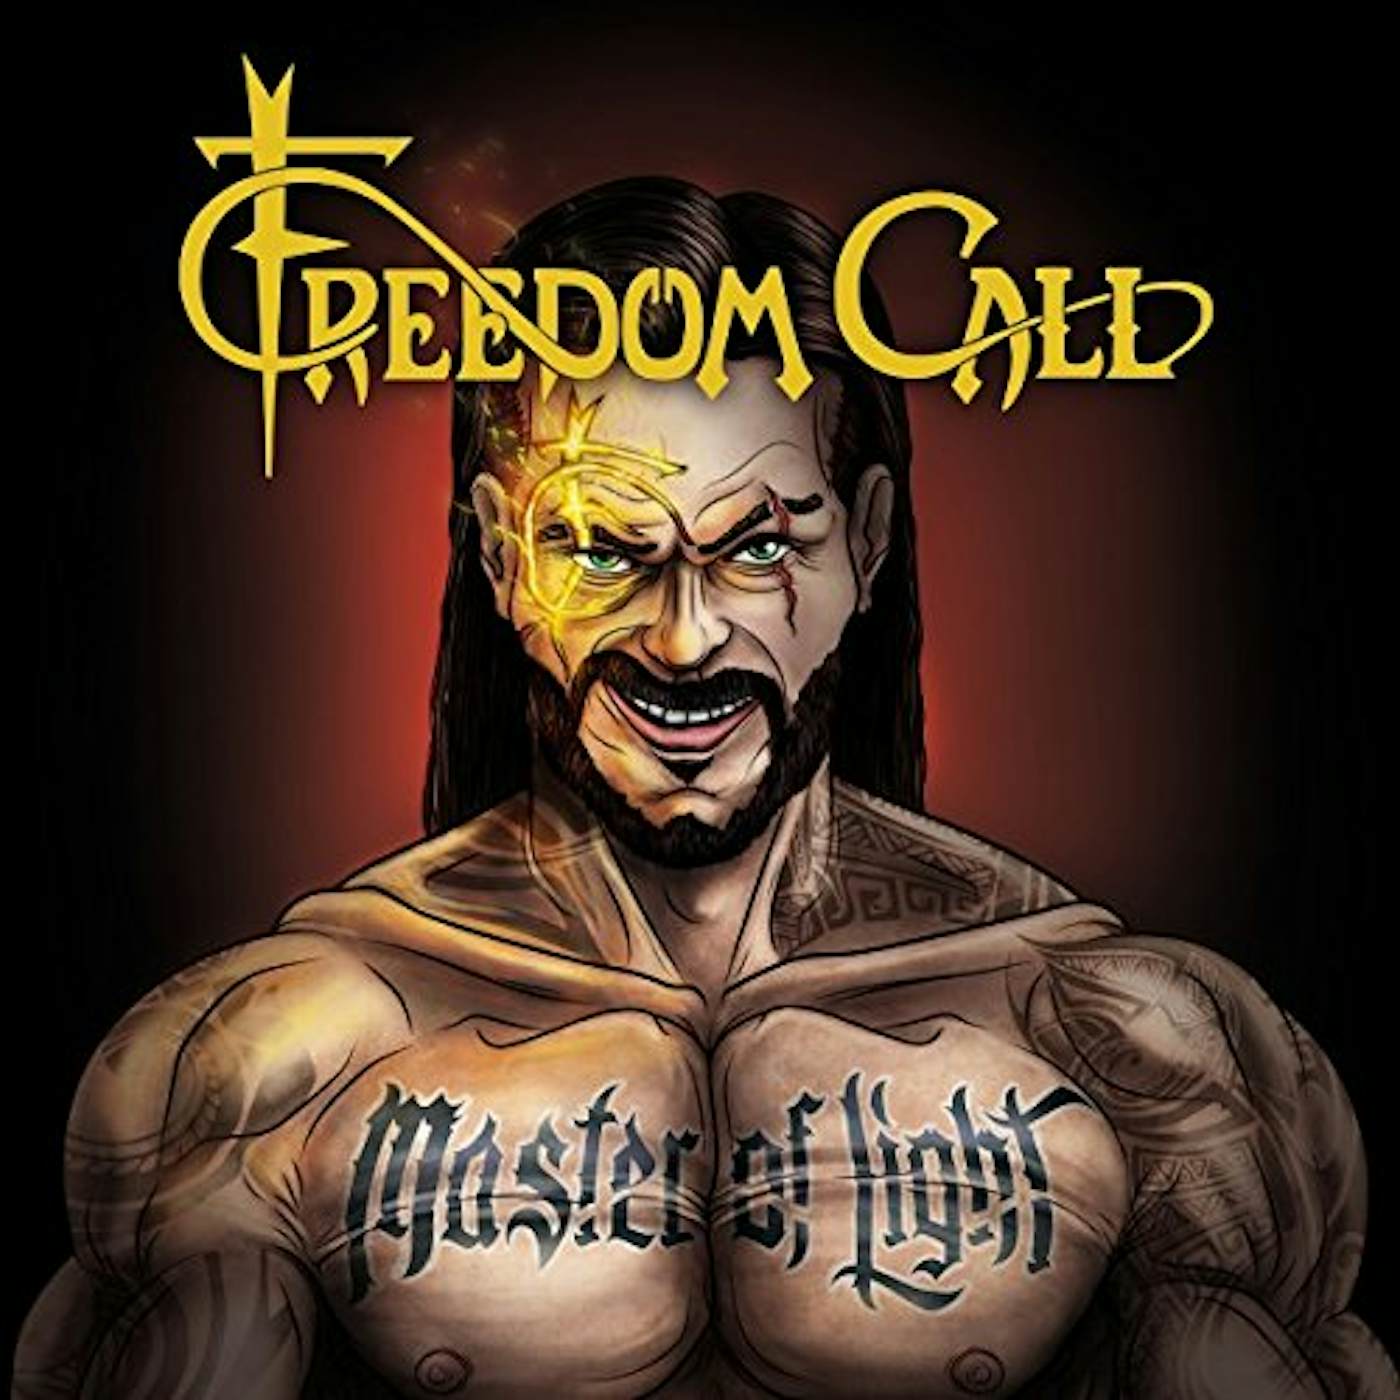 Freedom Call MASTER OF LIGHT (CD SUNGLASSES STICKERS ETC) CD